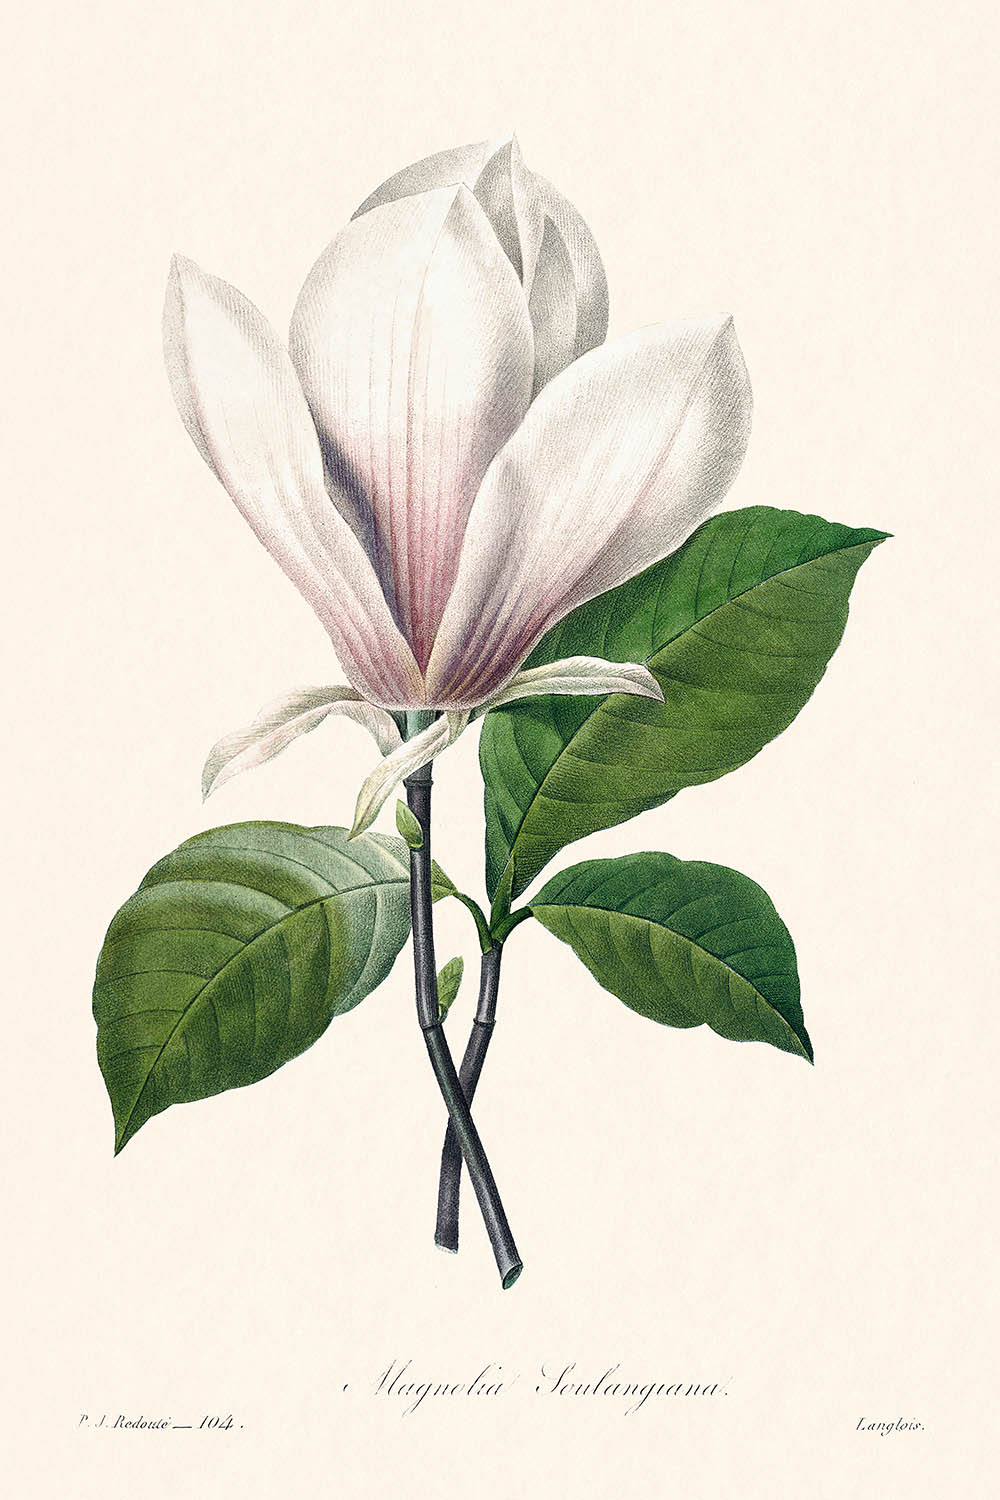 Magnolia Soulangiana de Pierre-Joseph Redouté, 1827